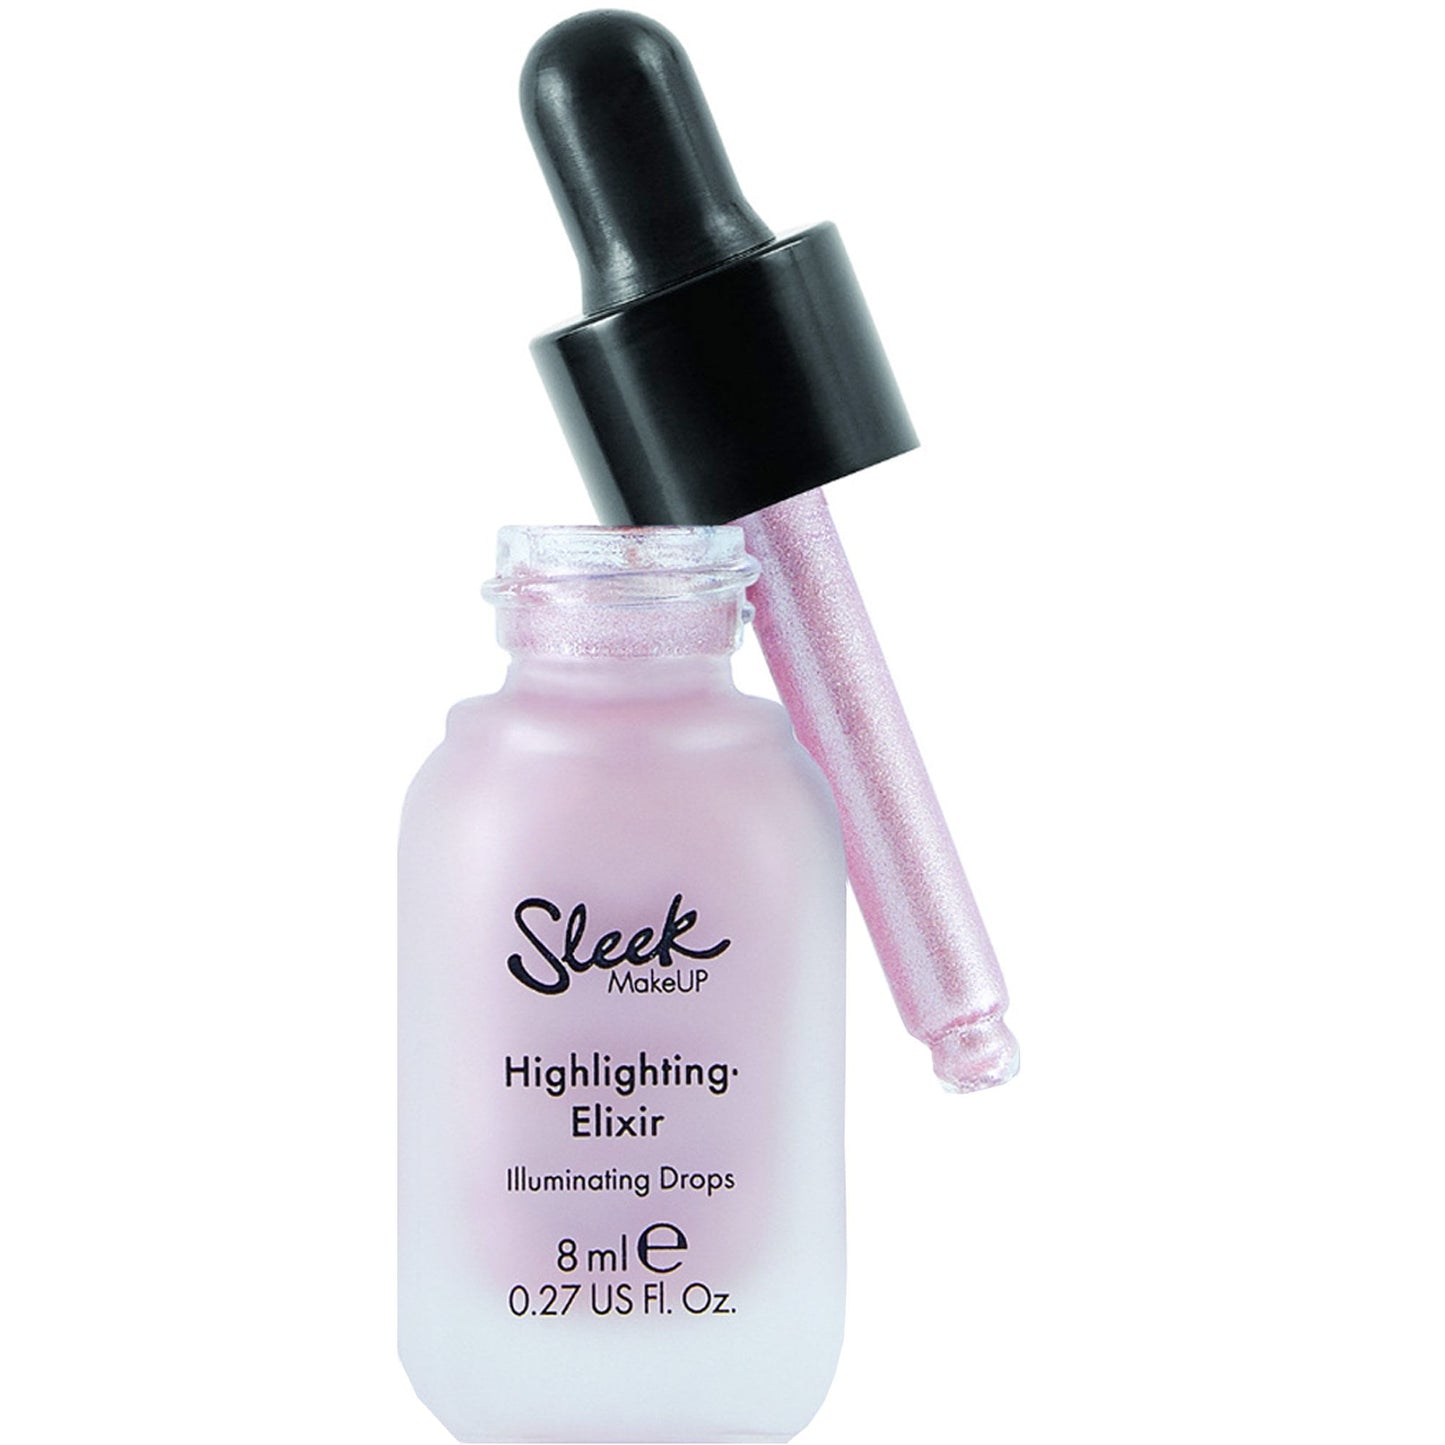 Sleek Highlighting Elixir Illuminating Drops